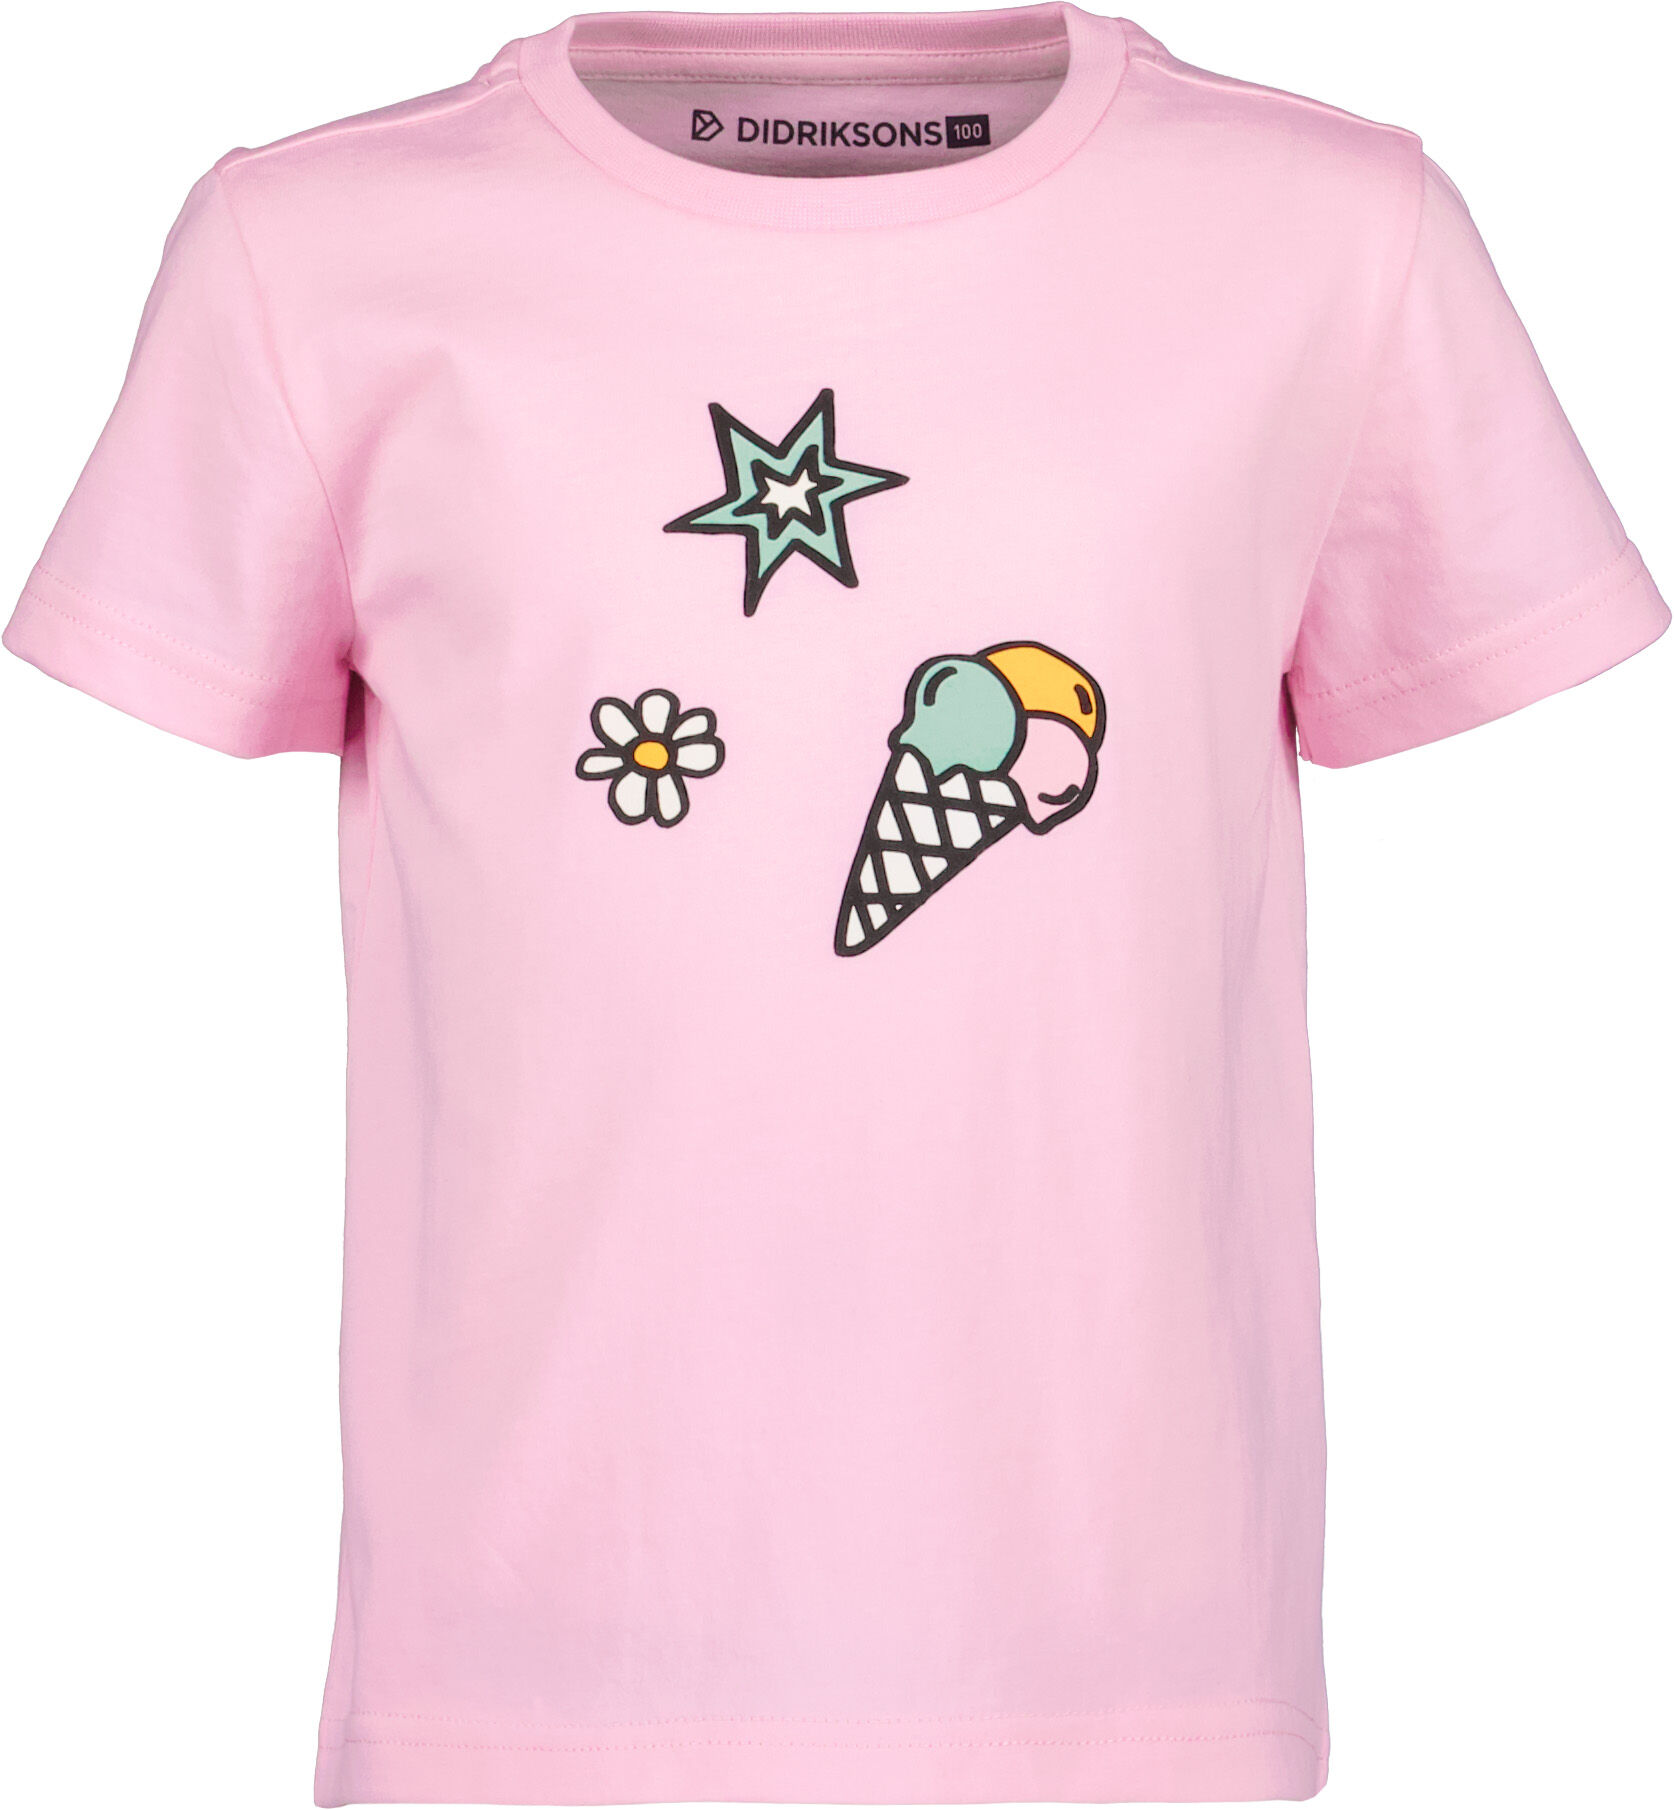 Didriksons Mynta T-shirt Orchid Pink 120